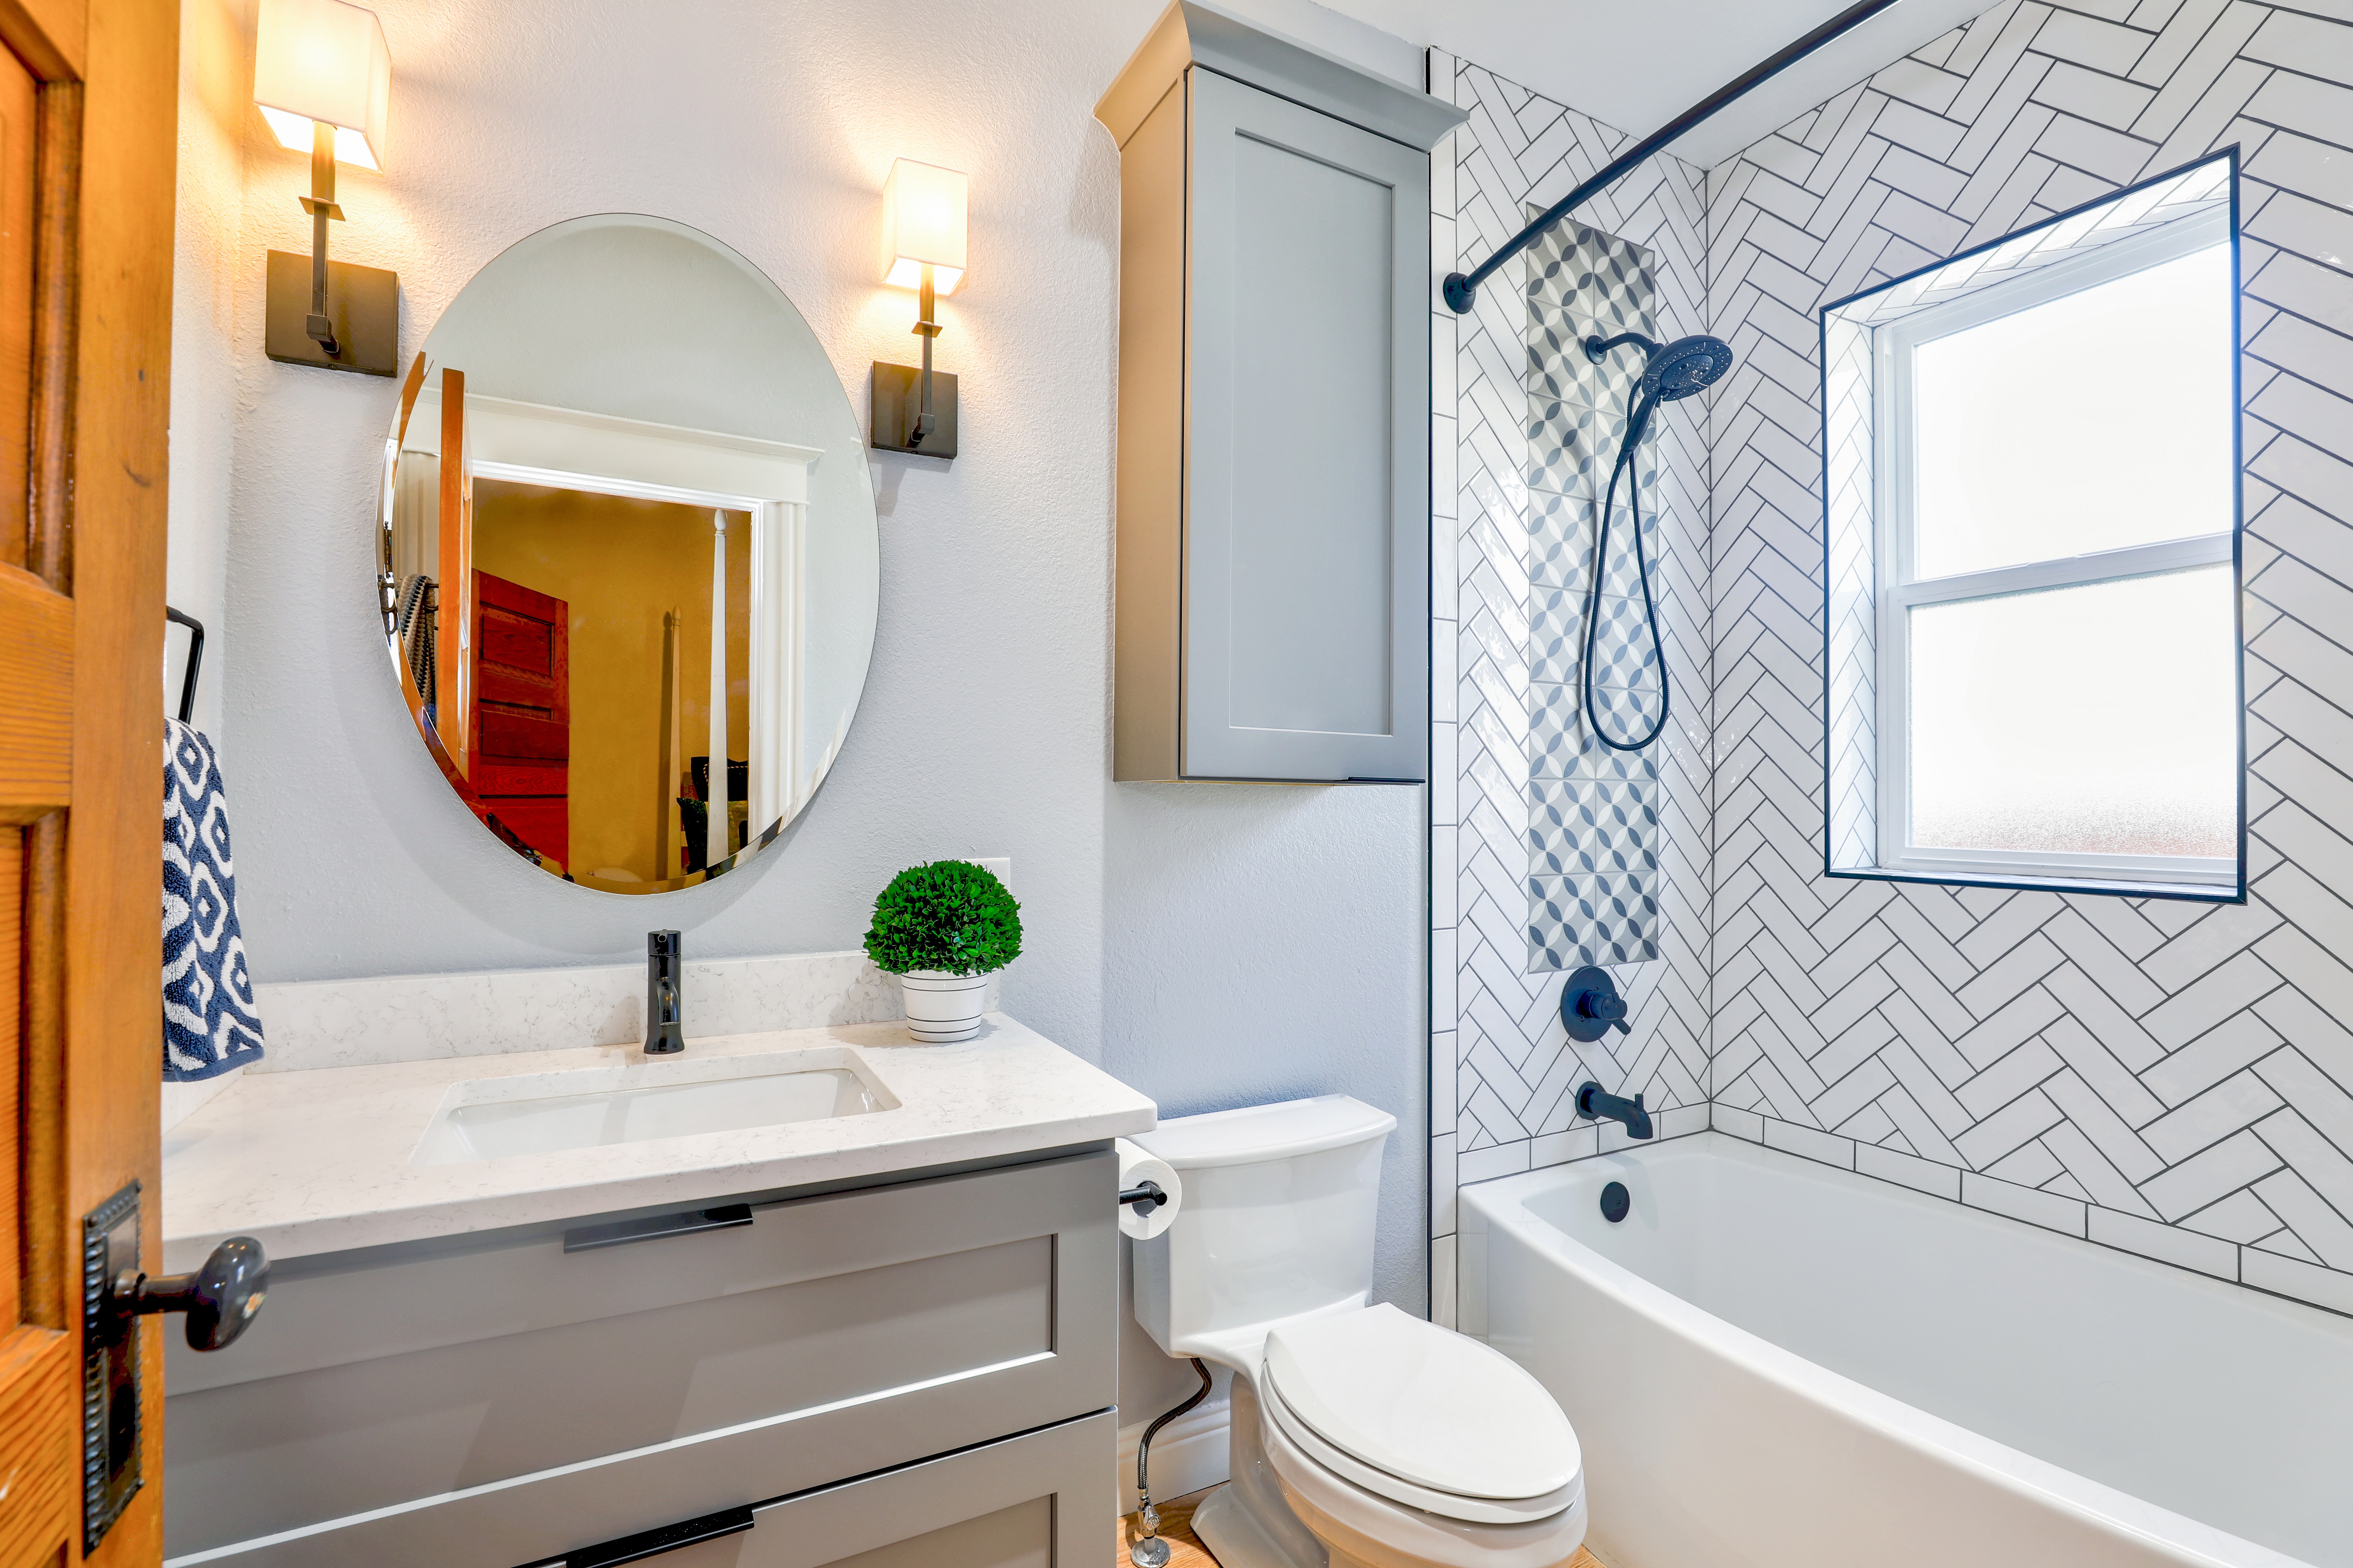 Hang Oval Mirror for Aesthetic Bathroom Decor